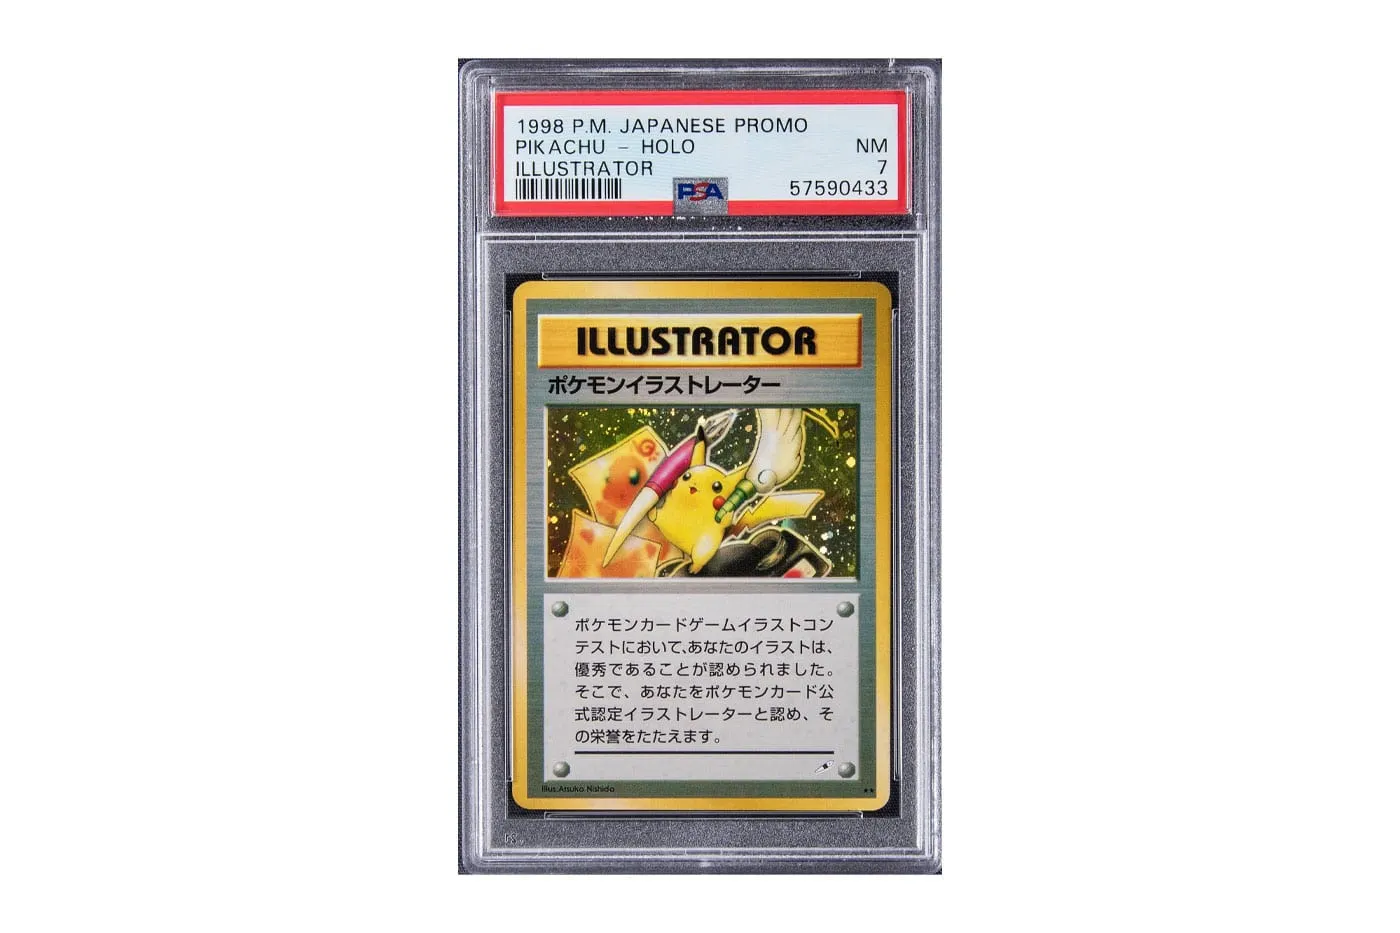 goldin auctions 1998 holographic illustrator pikachu pokemon card record breaking 900k usd sale 001